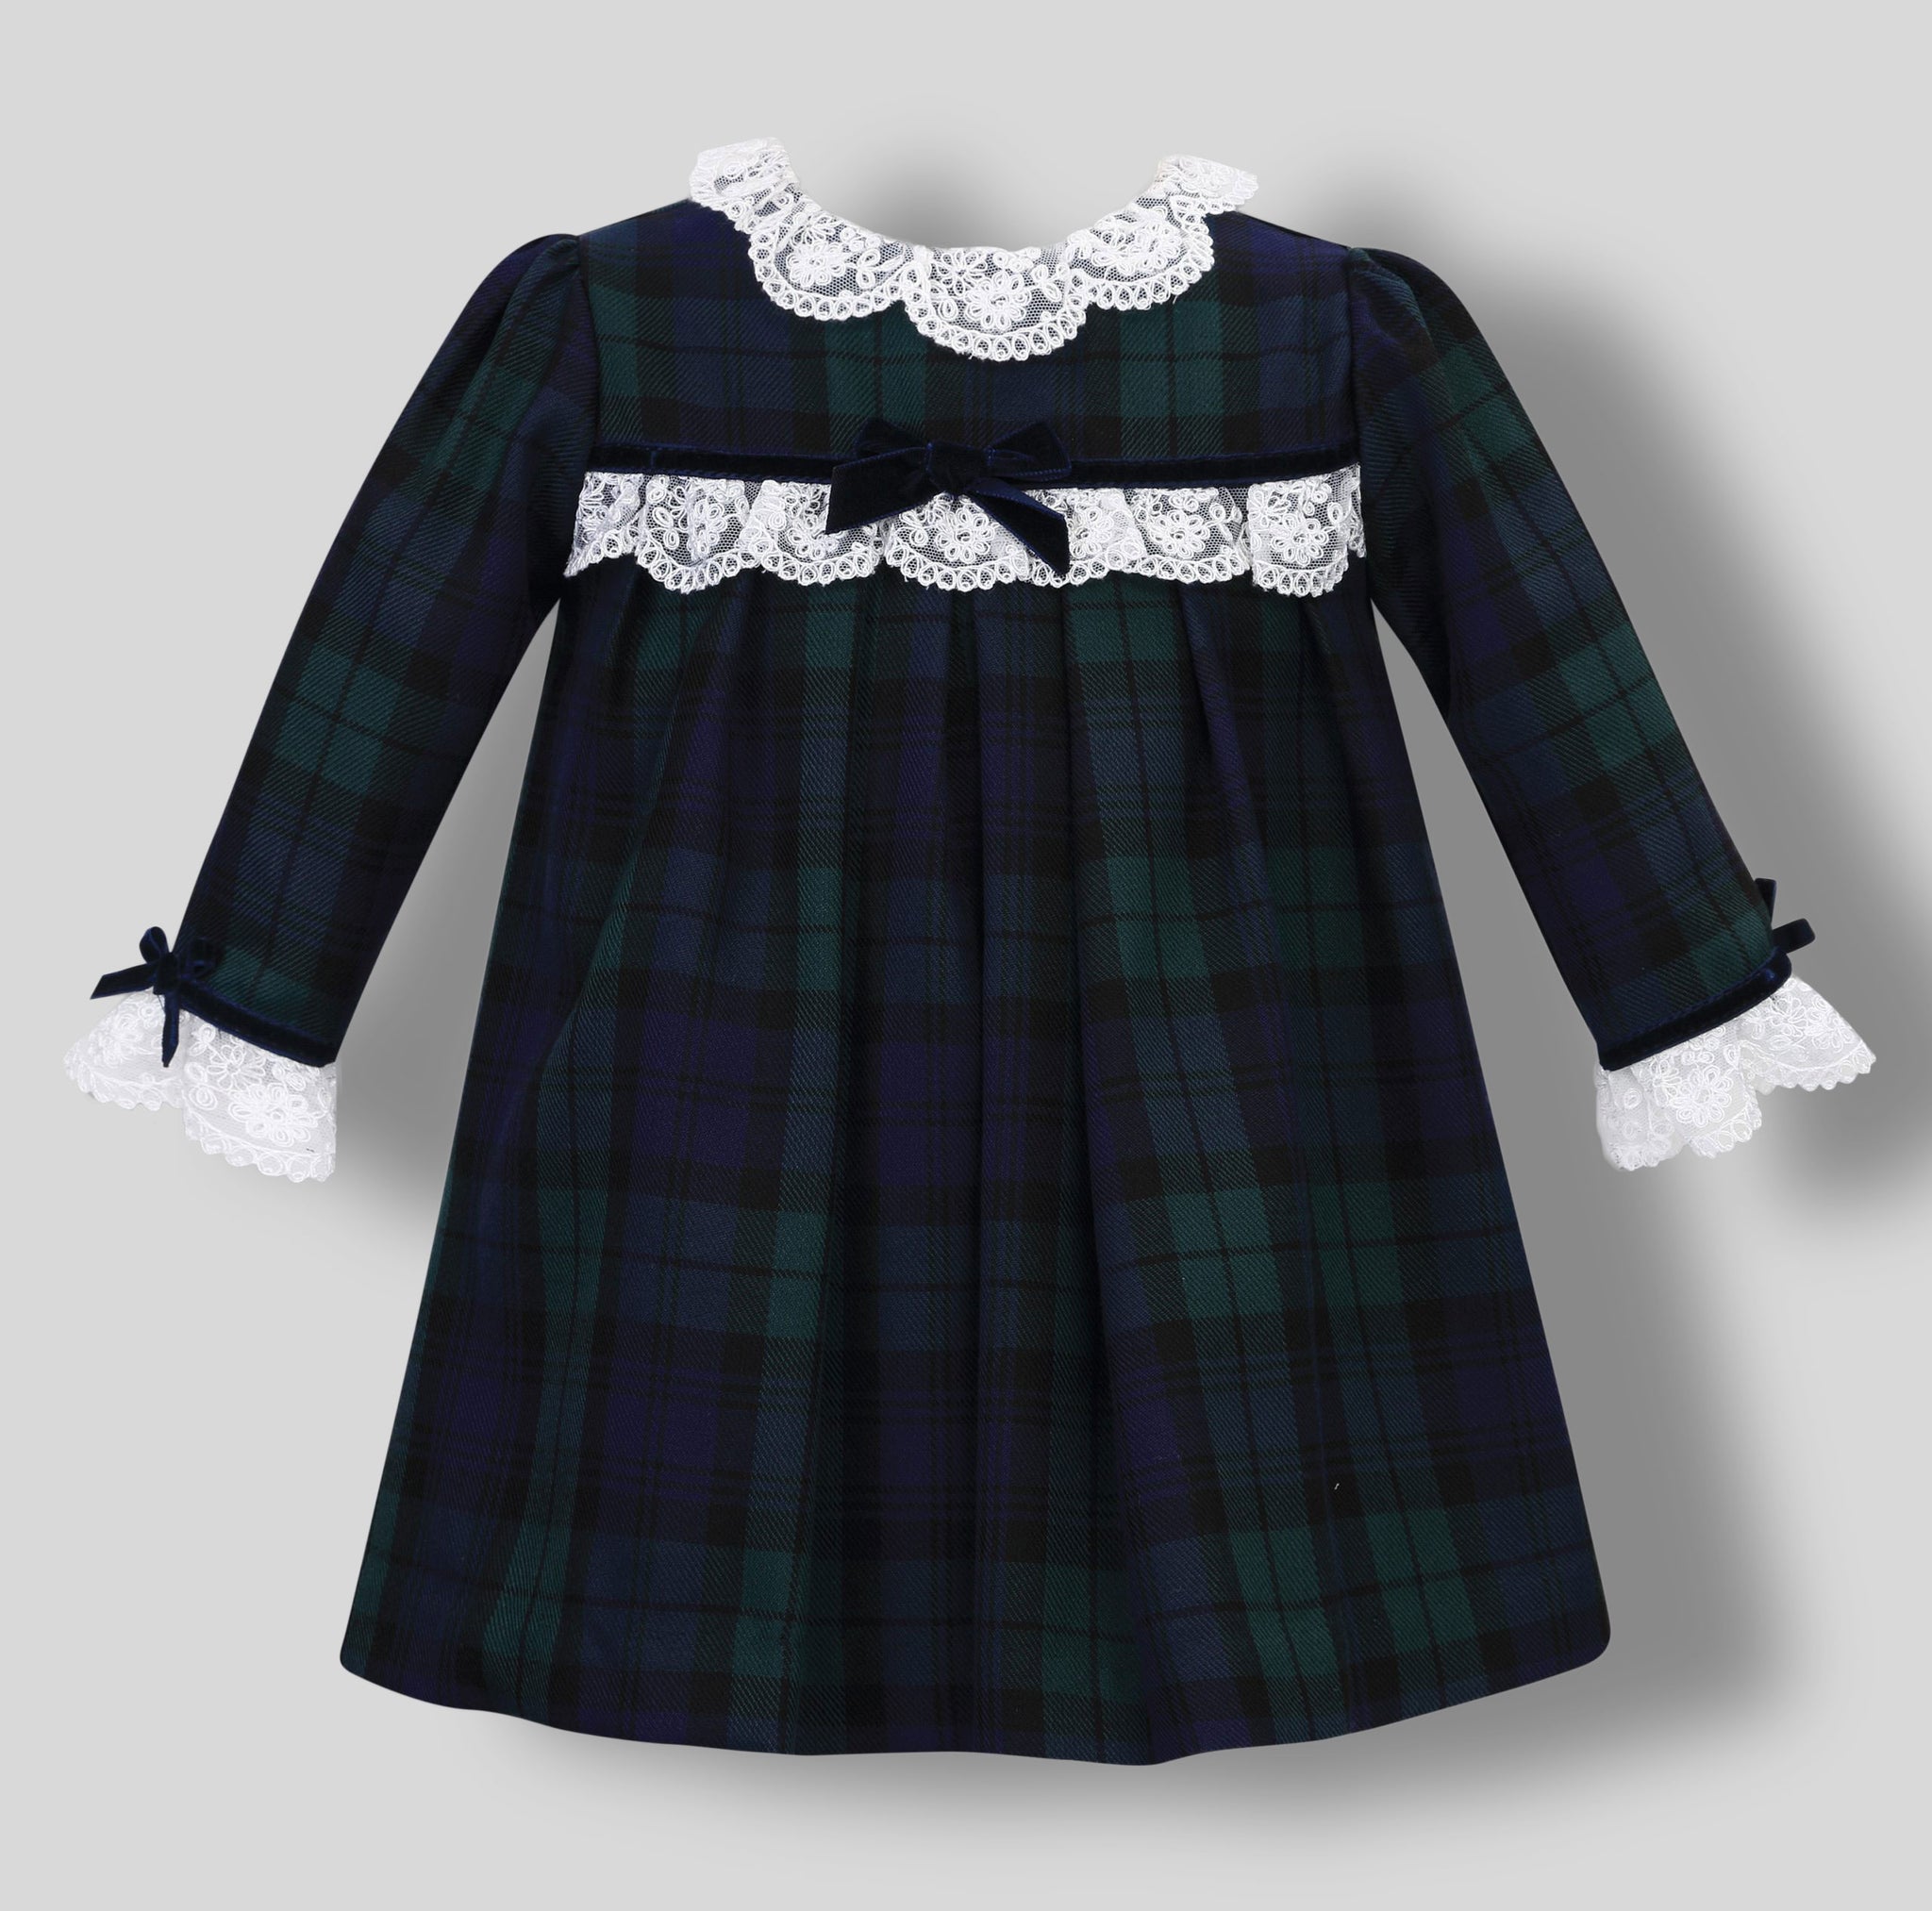 Blackwatch Tartan Dress with Lace Collar and Cuffs - Sarah Louise 012857